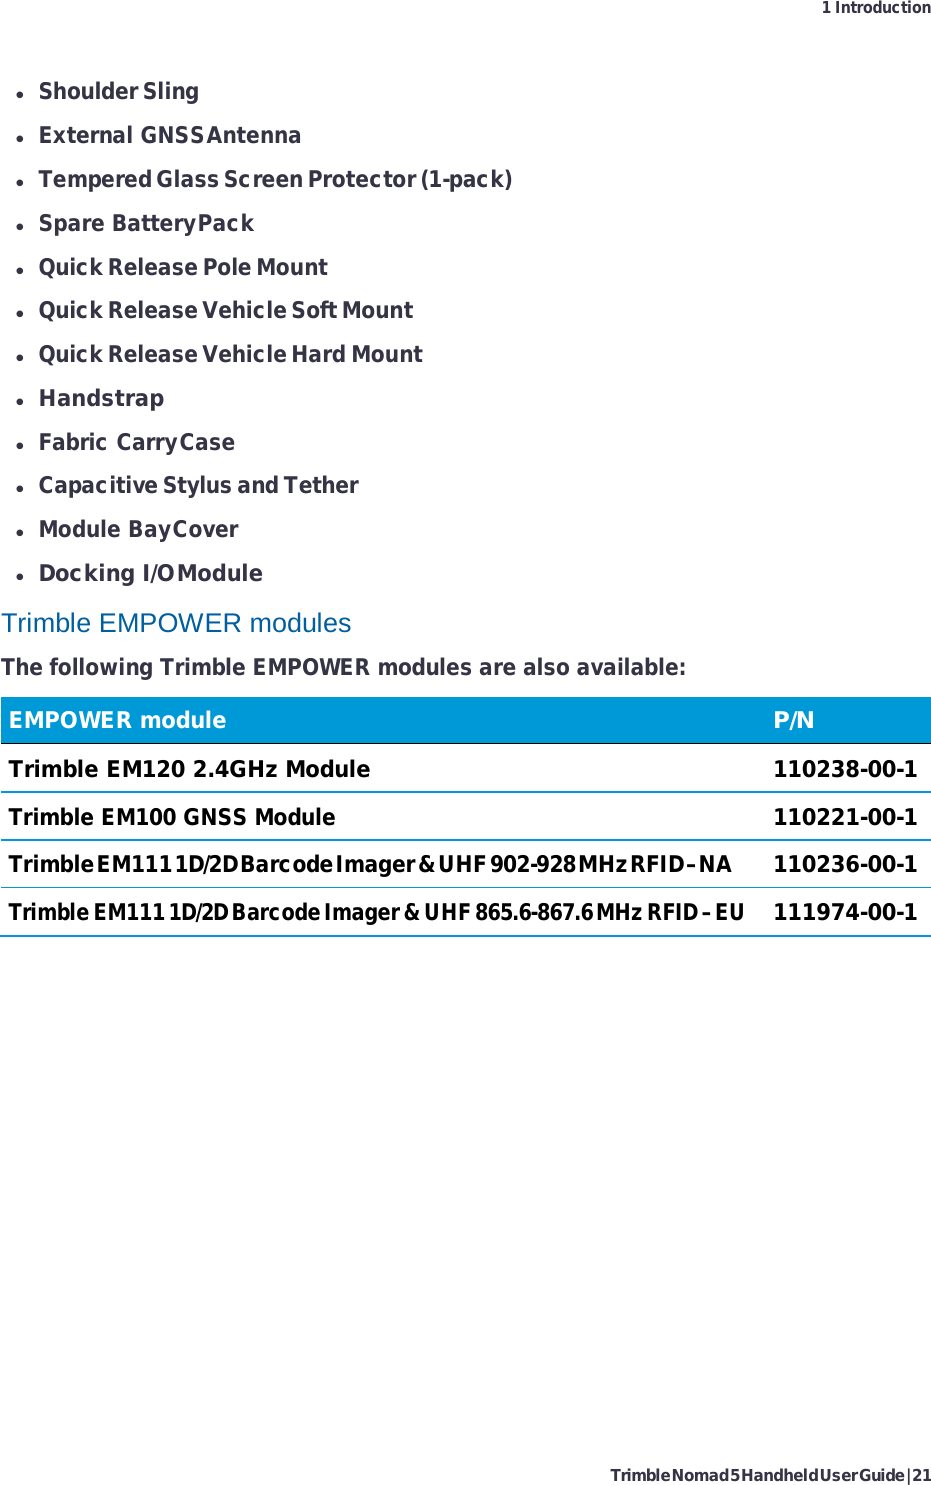 Trimble QCNFA324 2x2 802.11A/B/G/N/AC WiFi+Bluetooth Module User Manual My